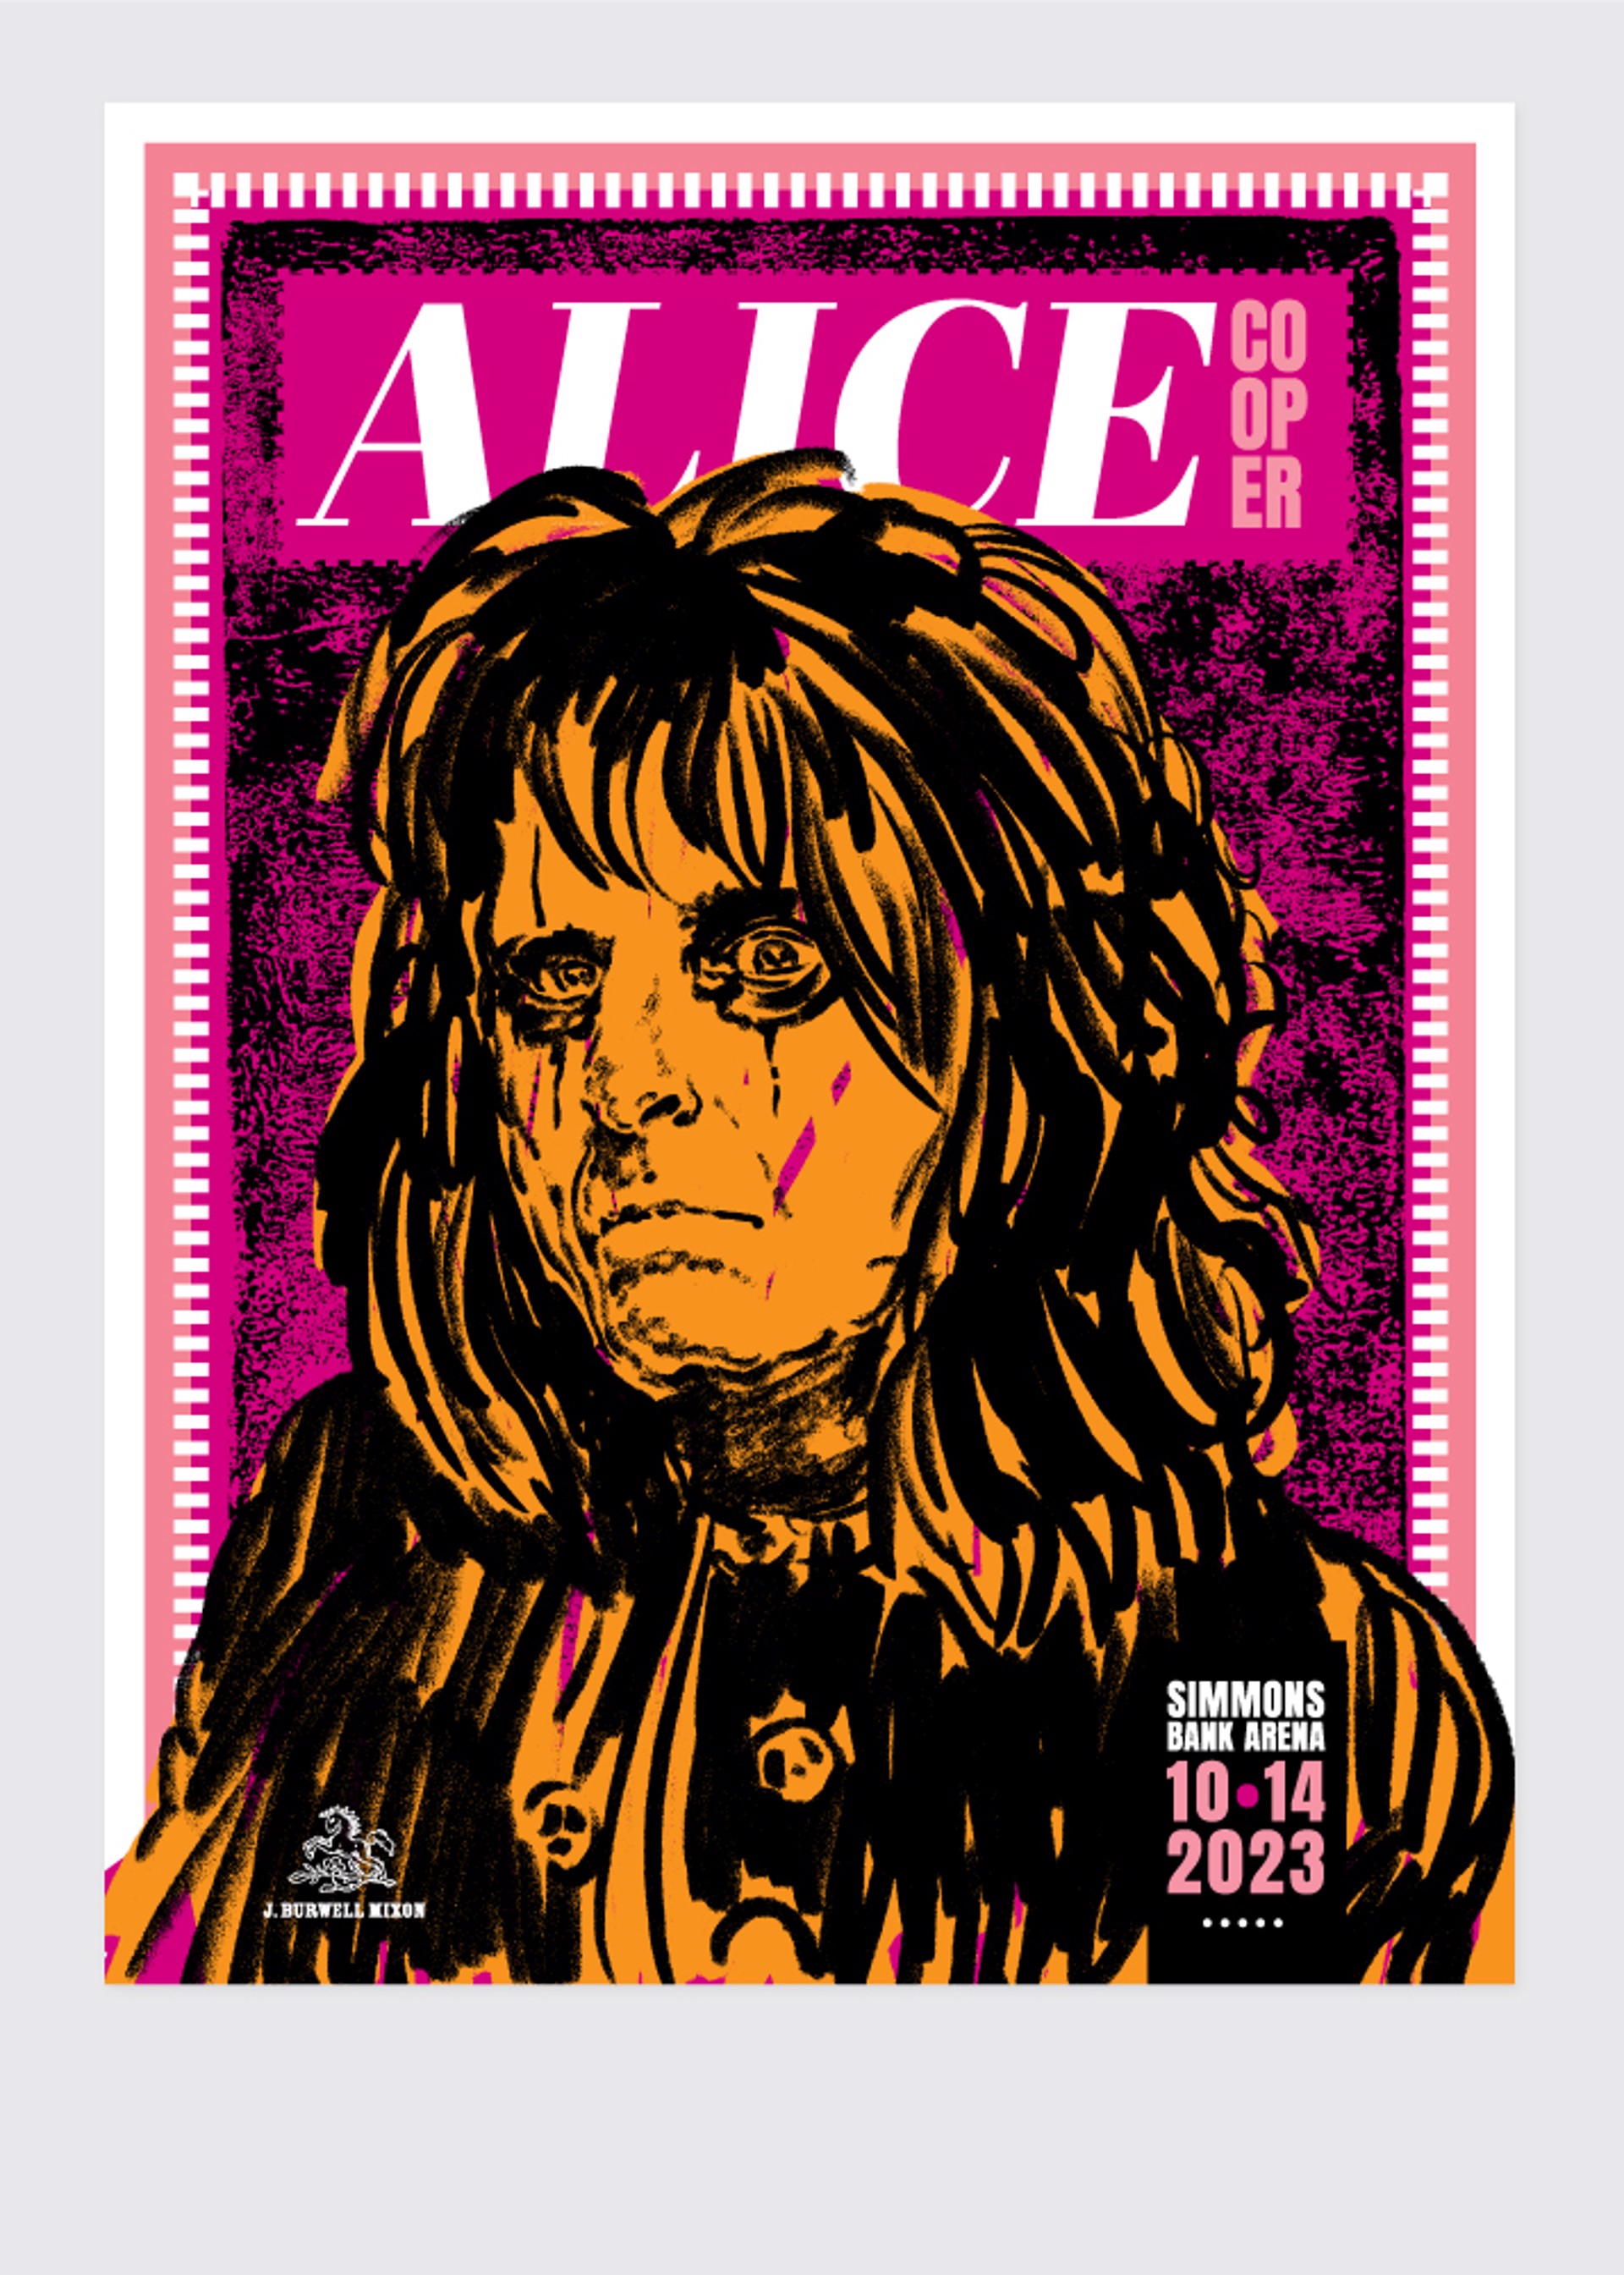 Alice Cooper Poster by Jamie Burwell Mixon